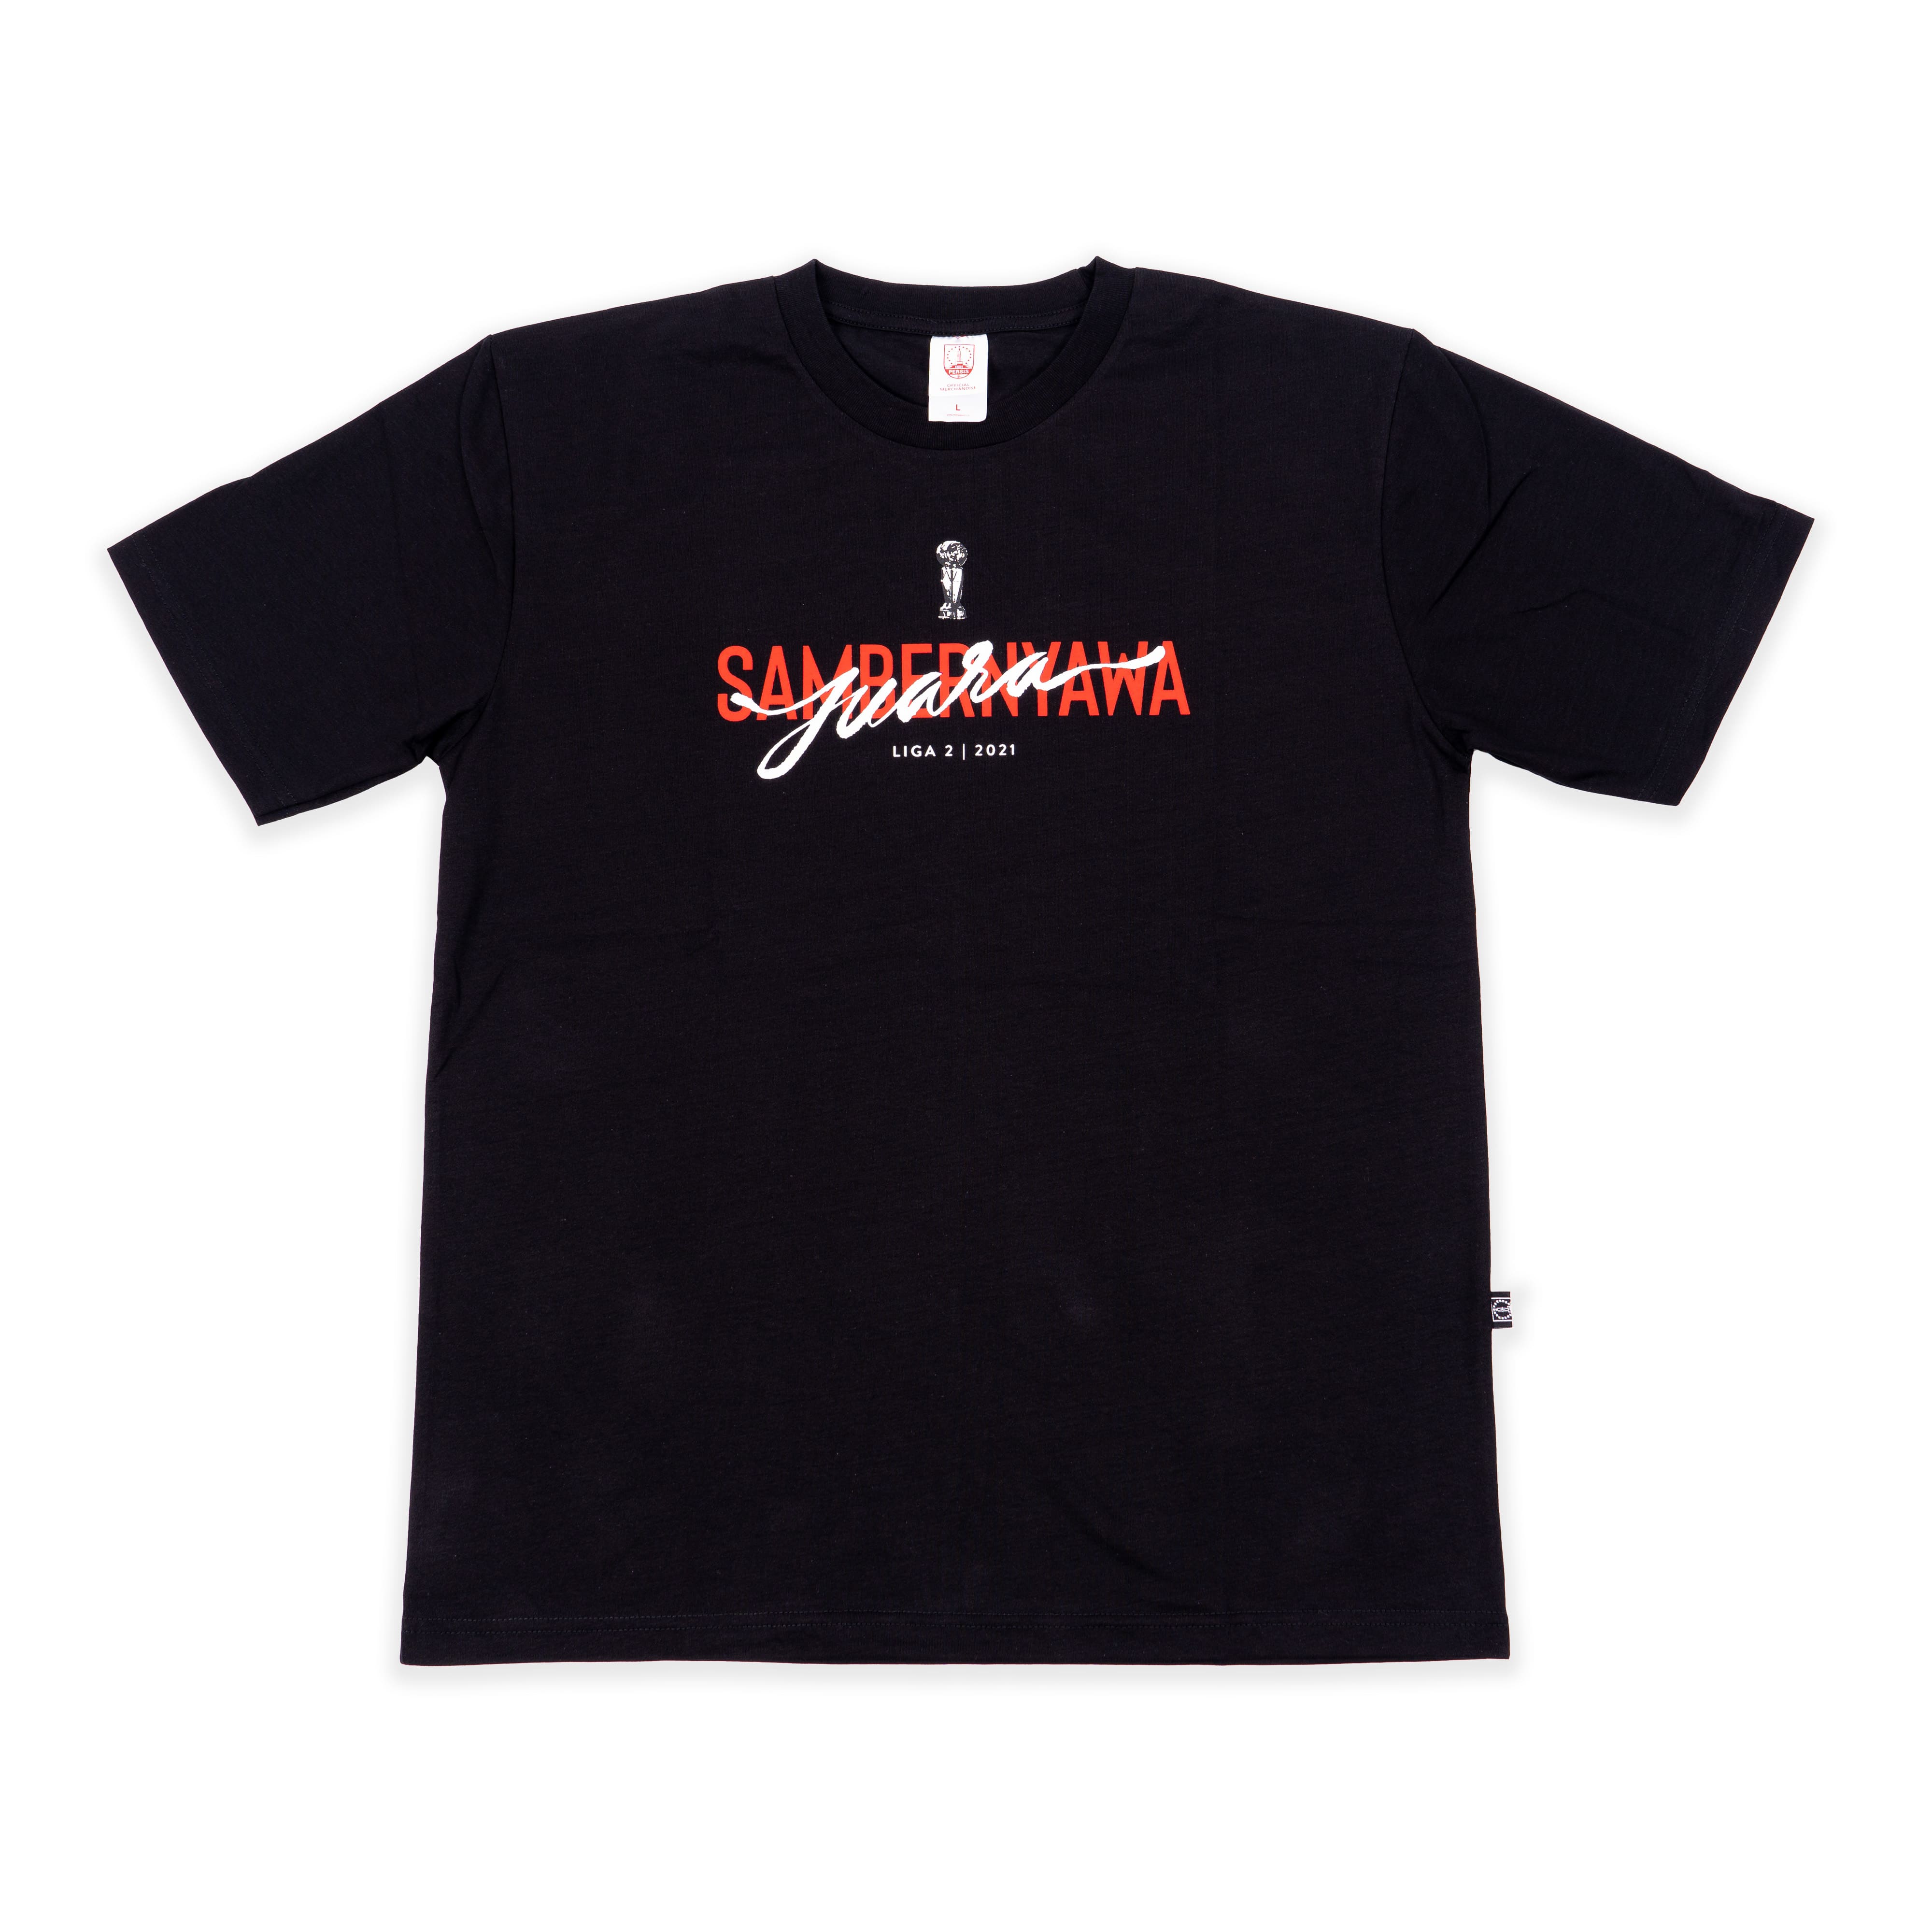 T-shirt-Sambernyawa-Juara-Hitam-1.jpg